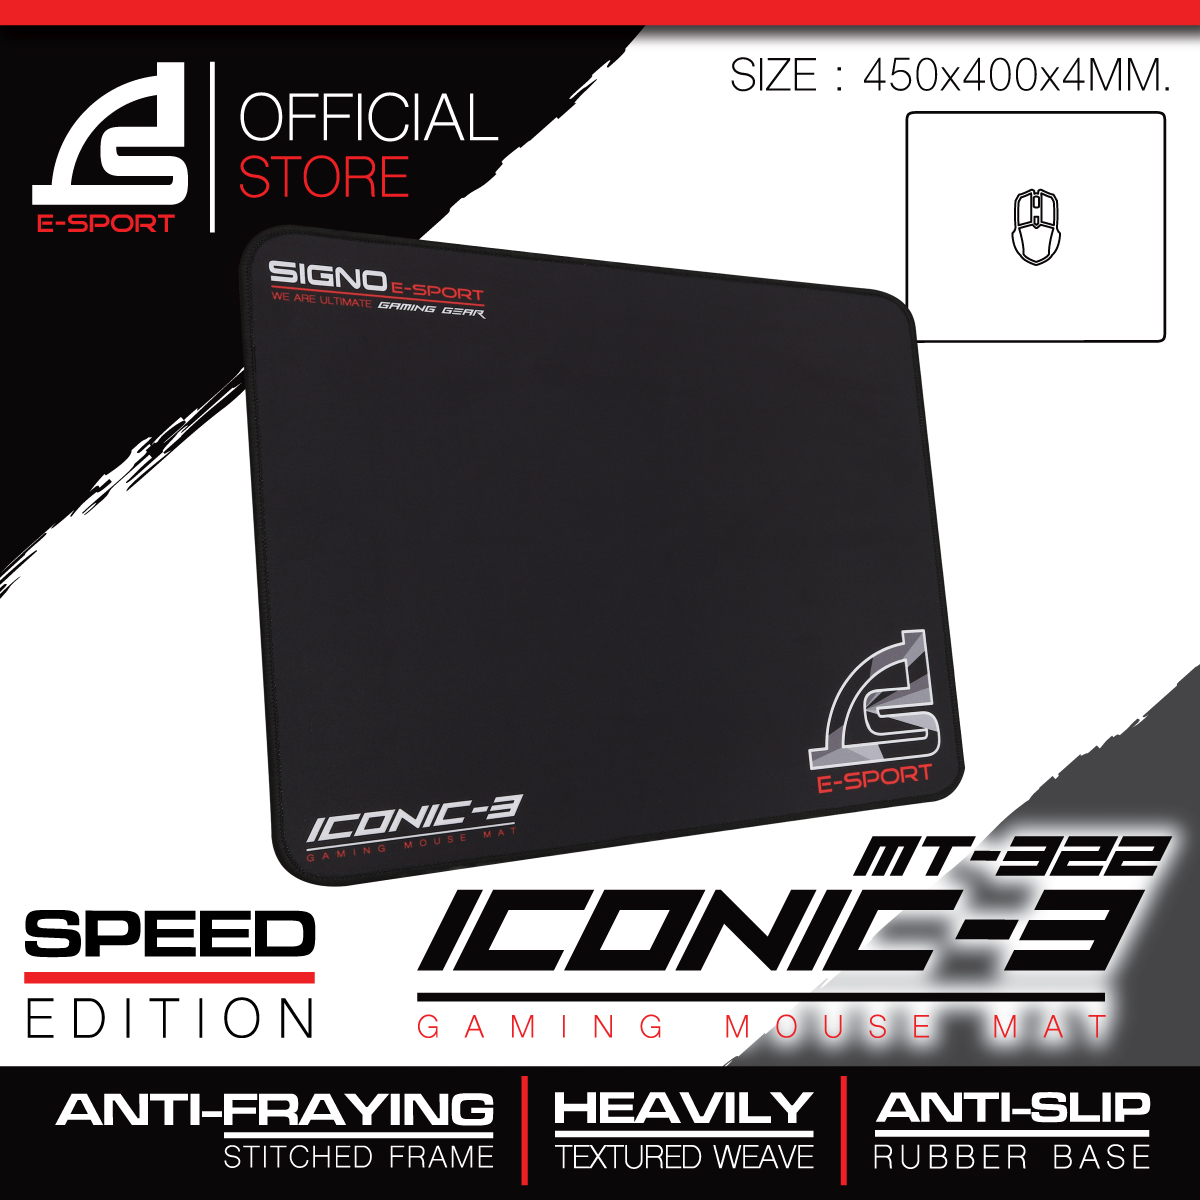 SIGNO E-Sport ICONIC-3 Gaming Mouse Mat รุ่น MT-322 (Speed Edition) (แผ่นรองเมาส์ เกมส์มิ่ง)